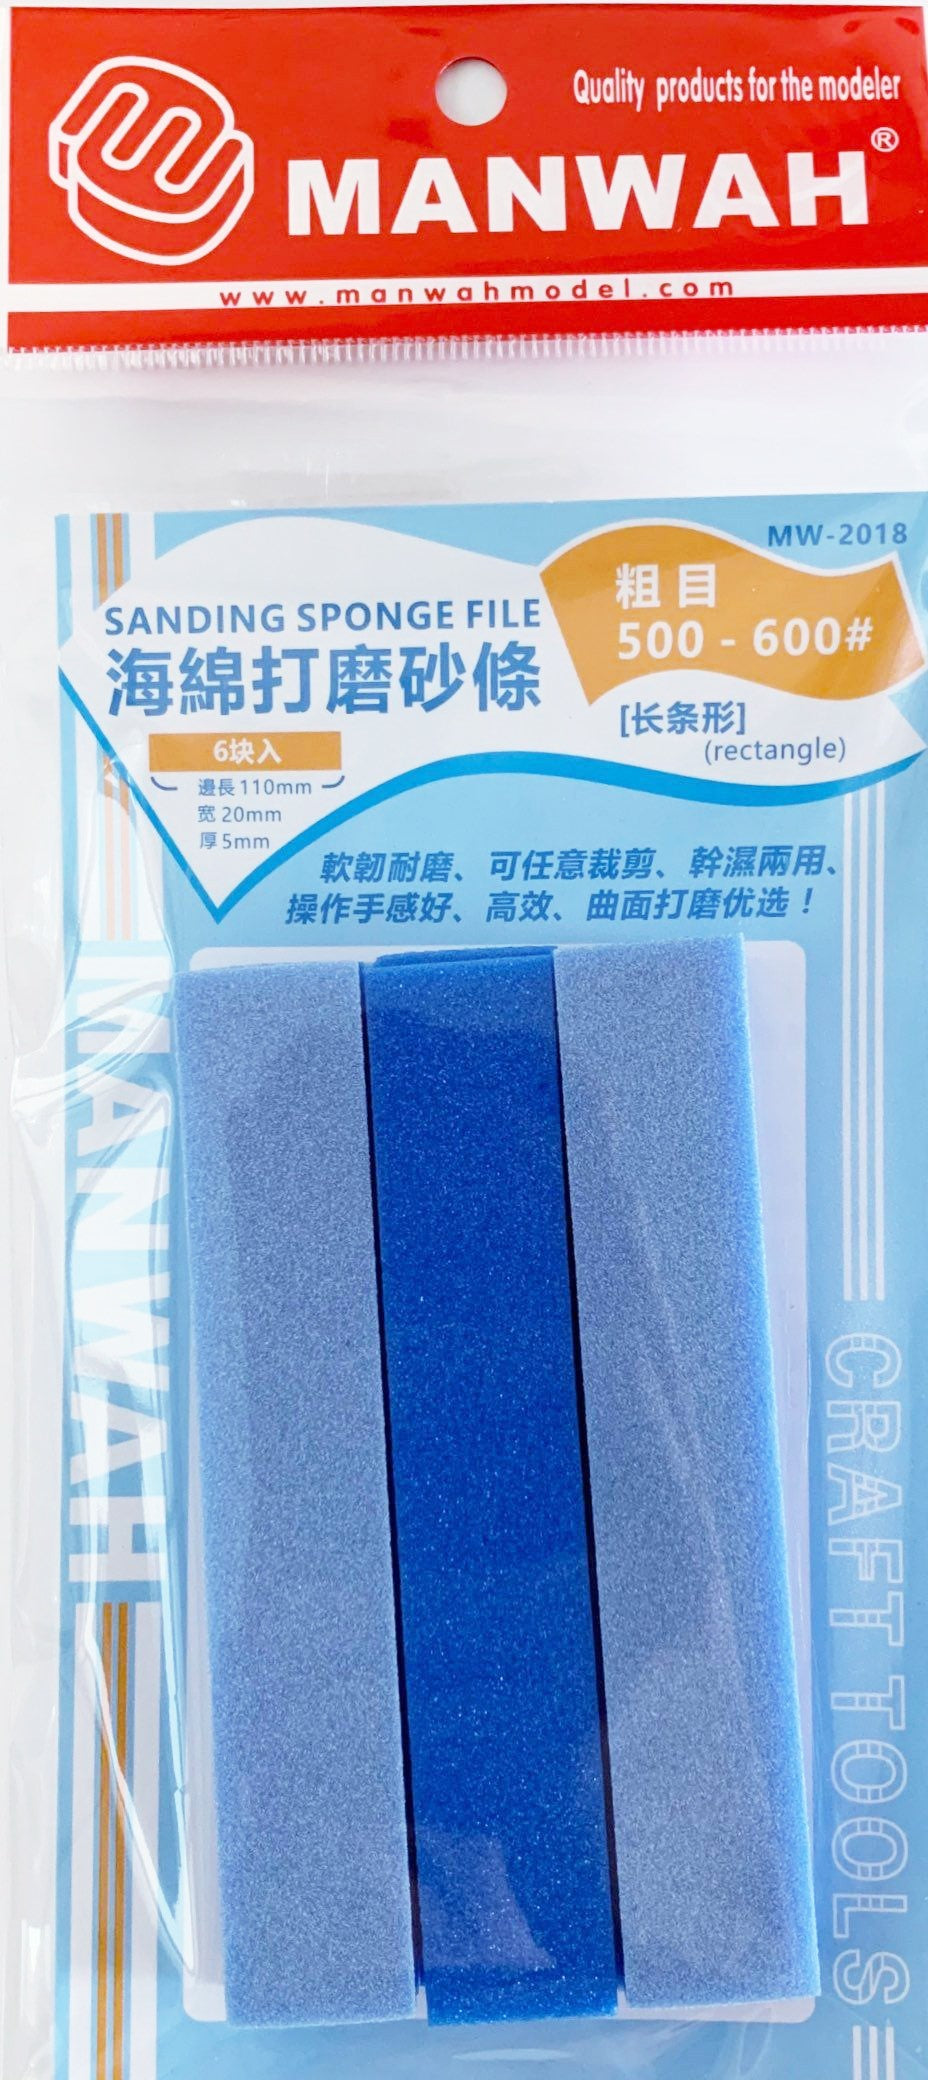 Manwah Sanding Sponge File